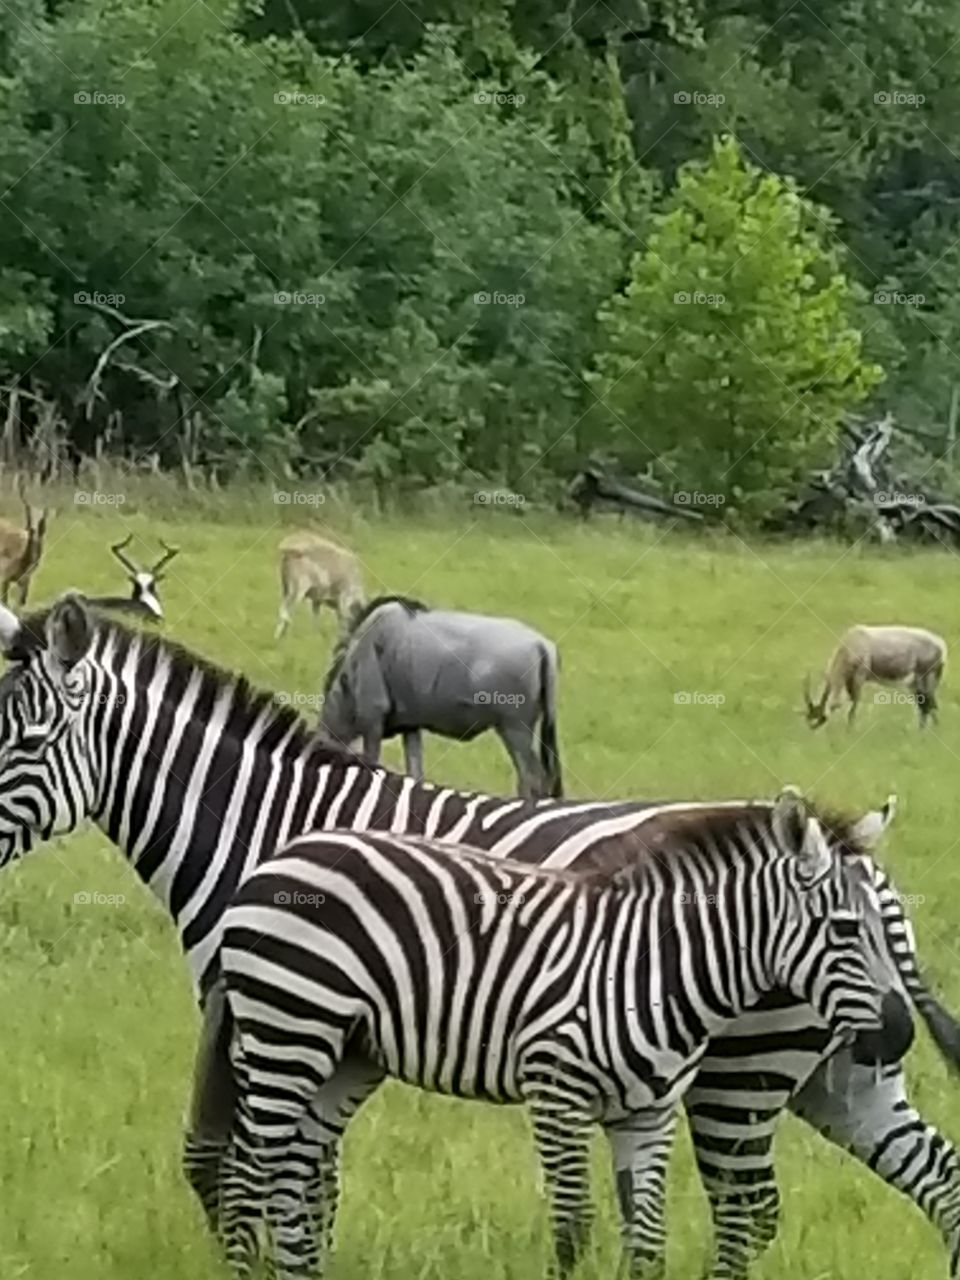 Zebras at the Alabama Safari near Montgomery